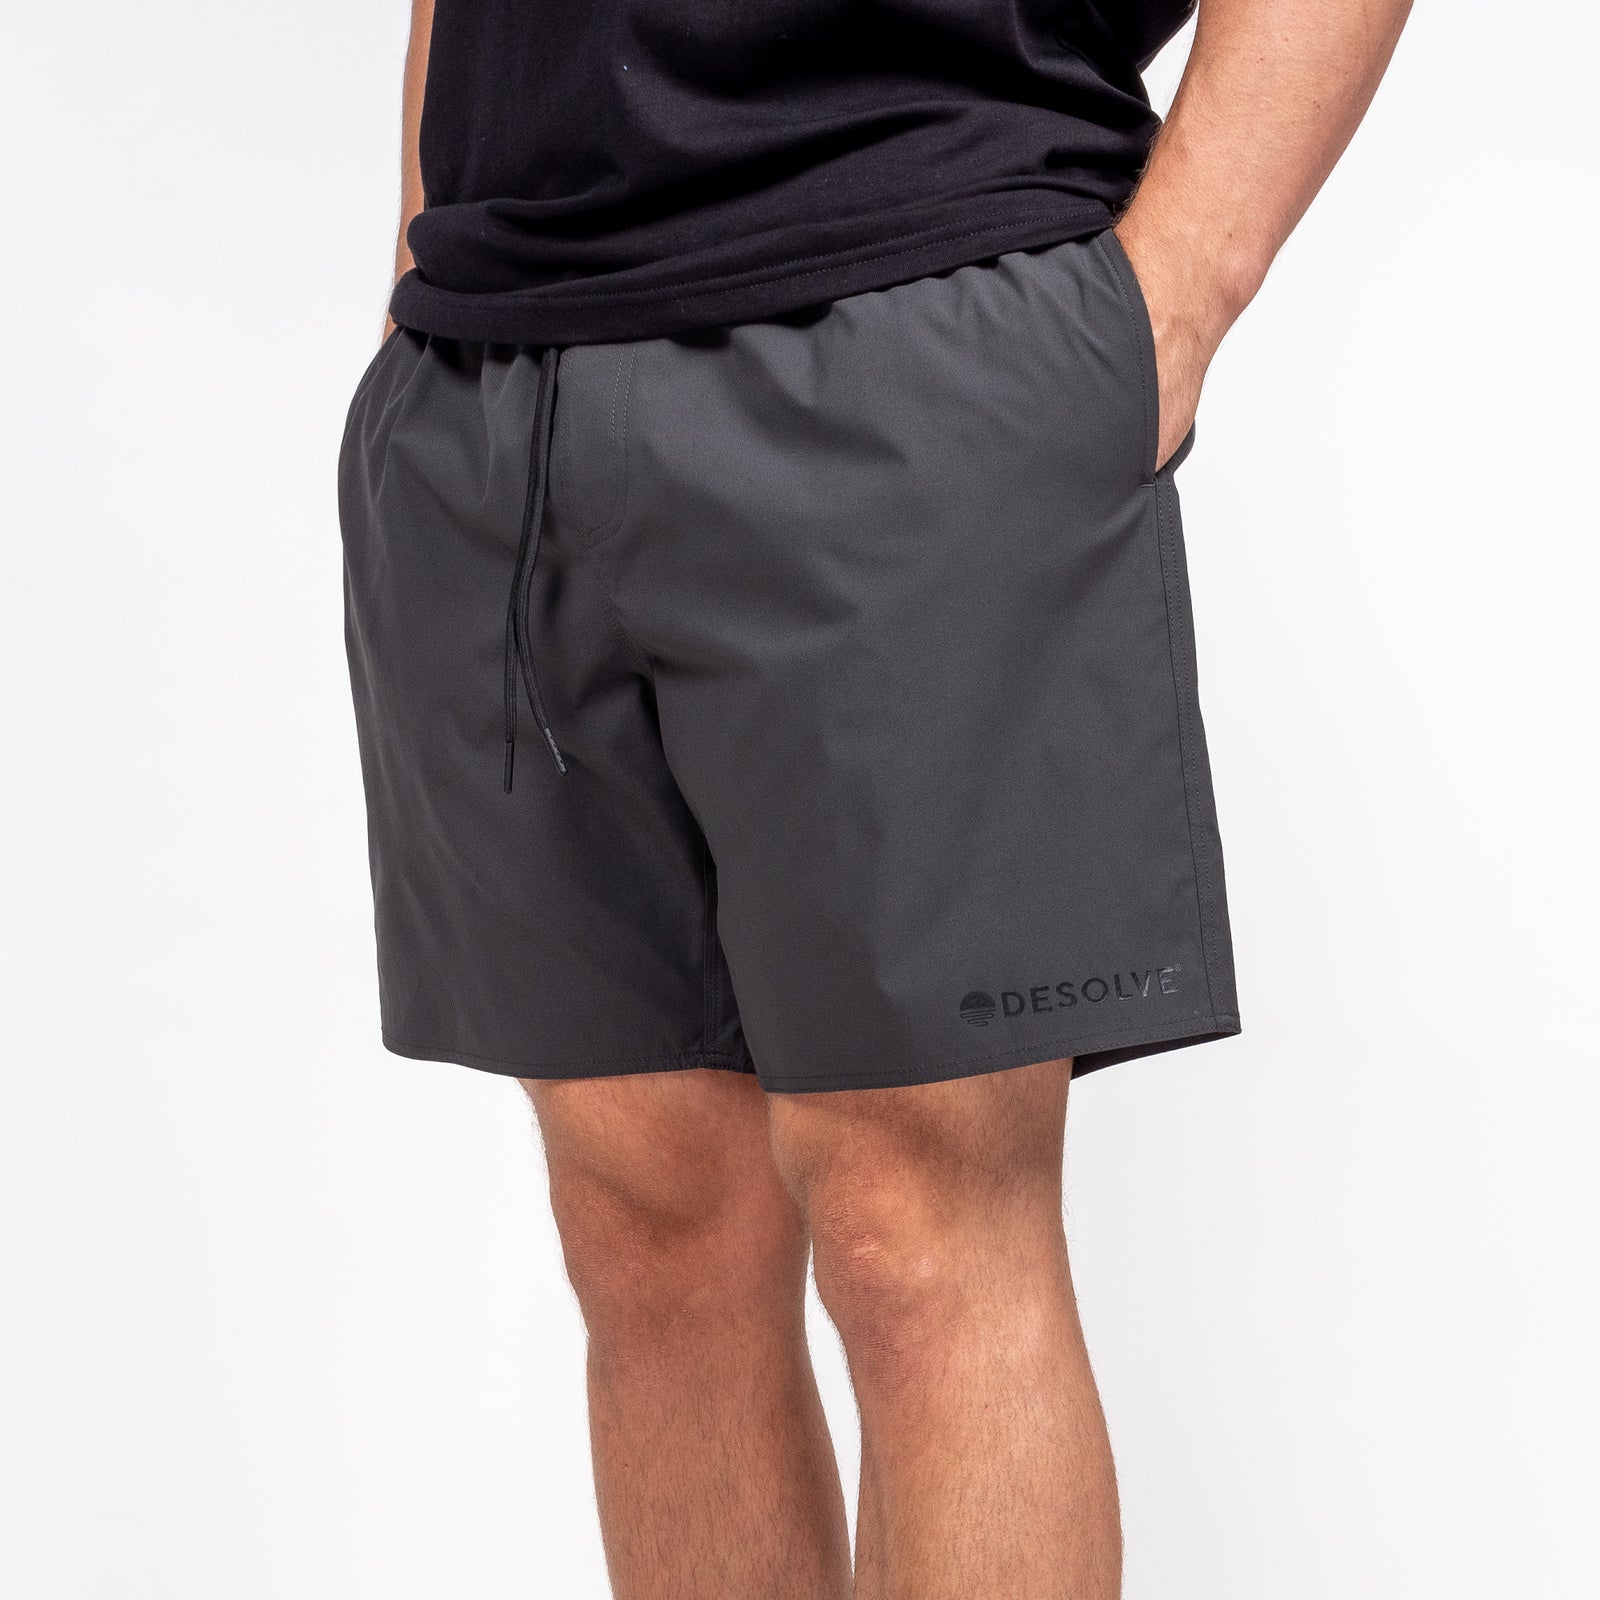 UV Rapid-Dry Shorts & Leggings, Desolve